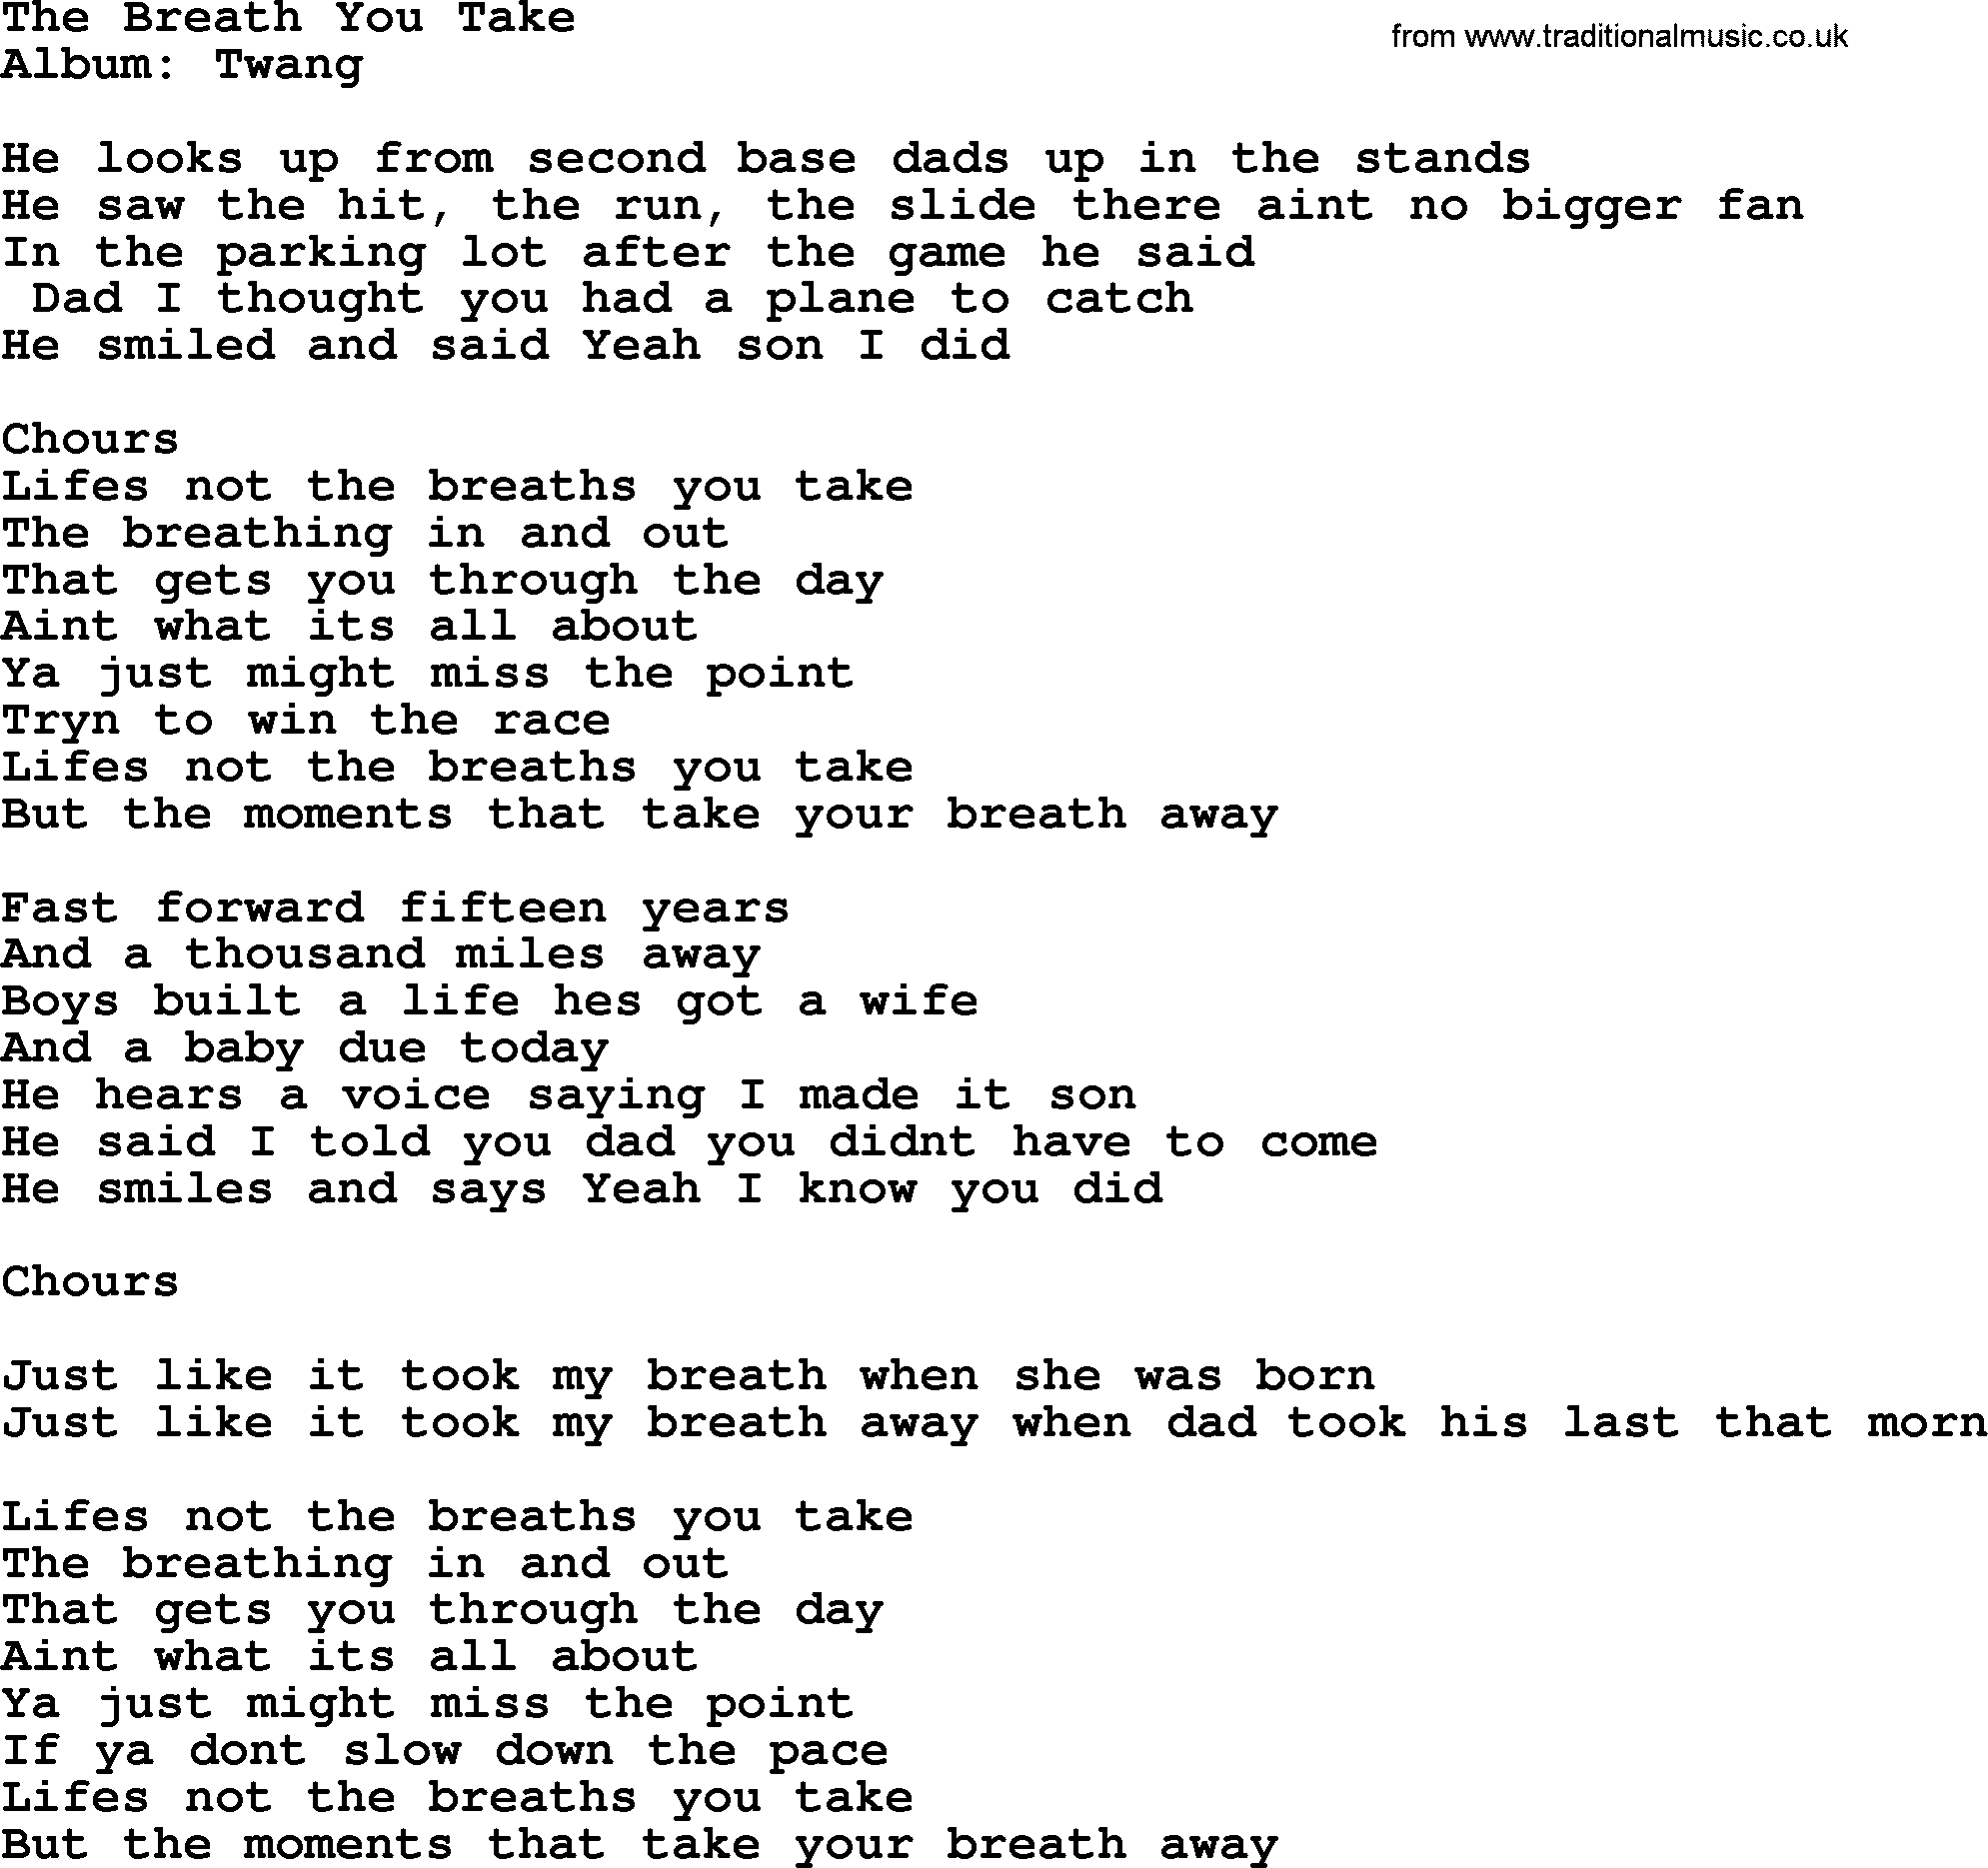 George Strait song: The Breath You Take, lyrics